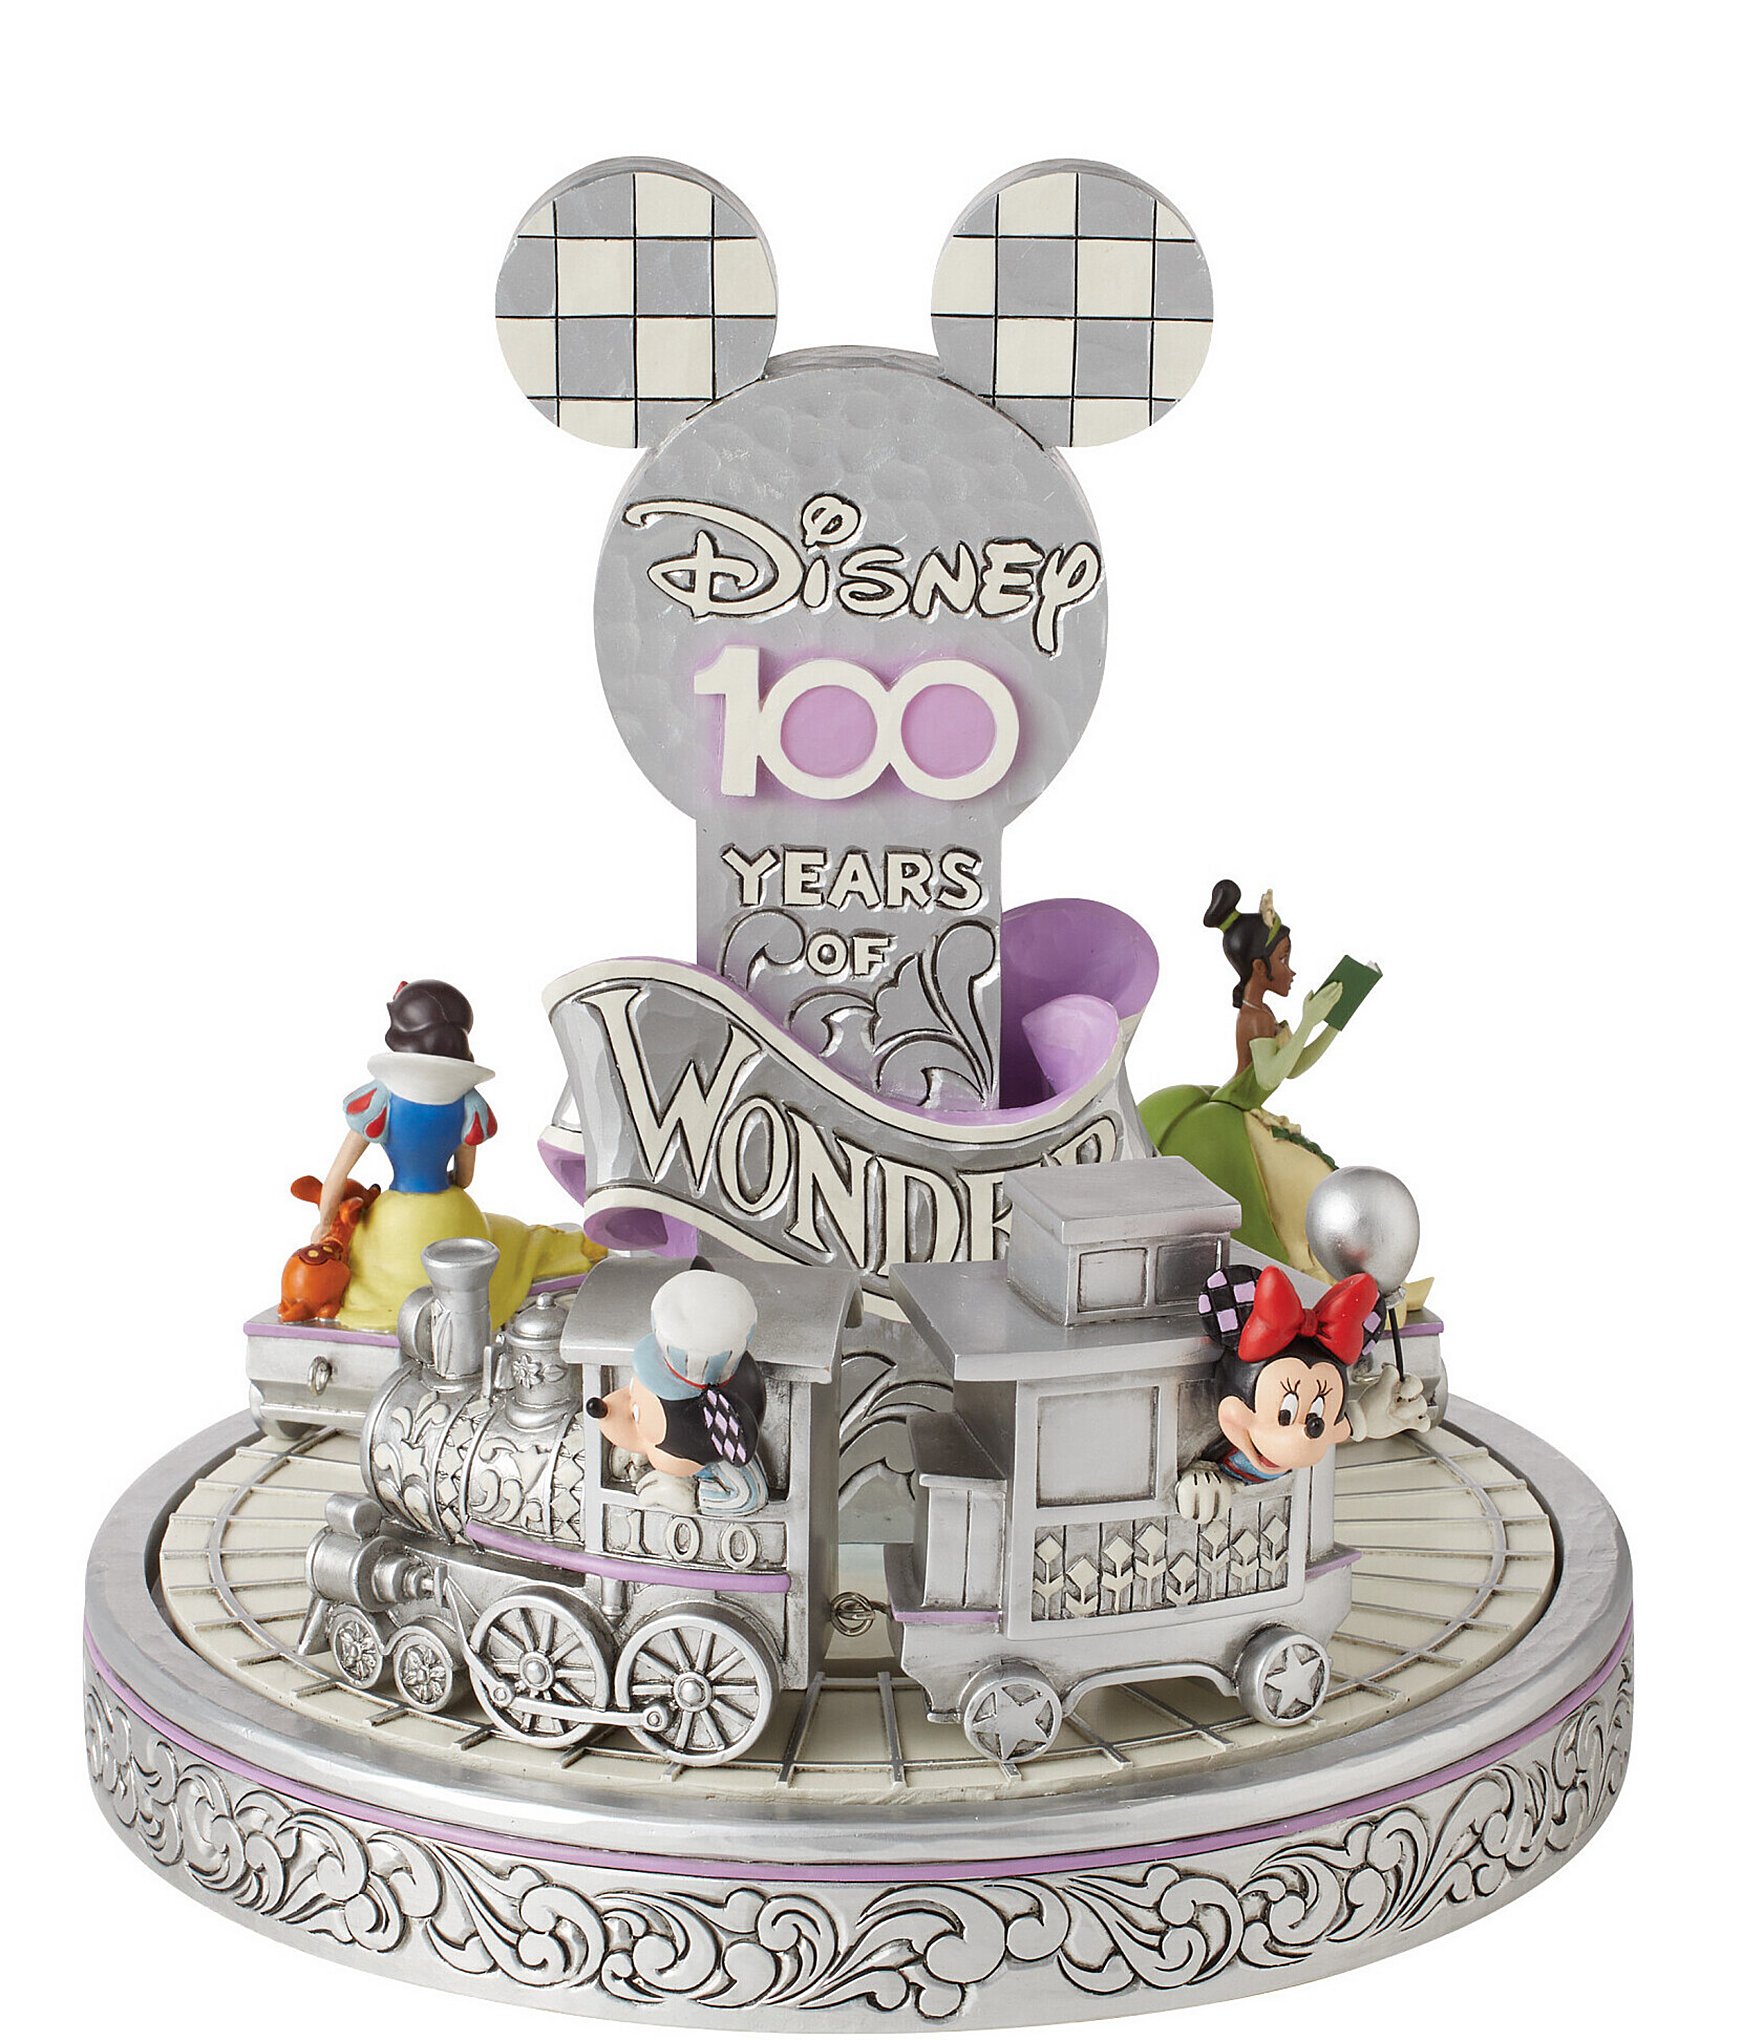 Disney 100 Years of Wonder Gift Set - Entertainment Earth